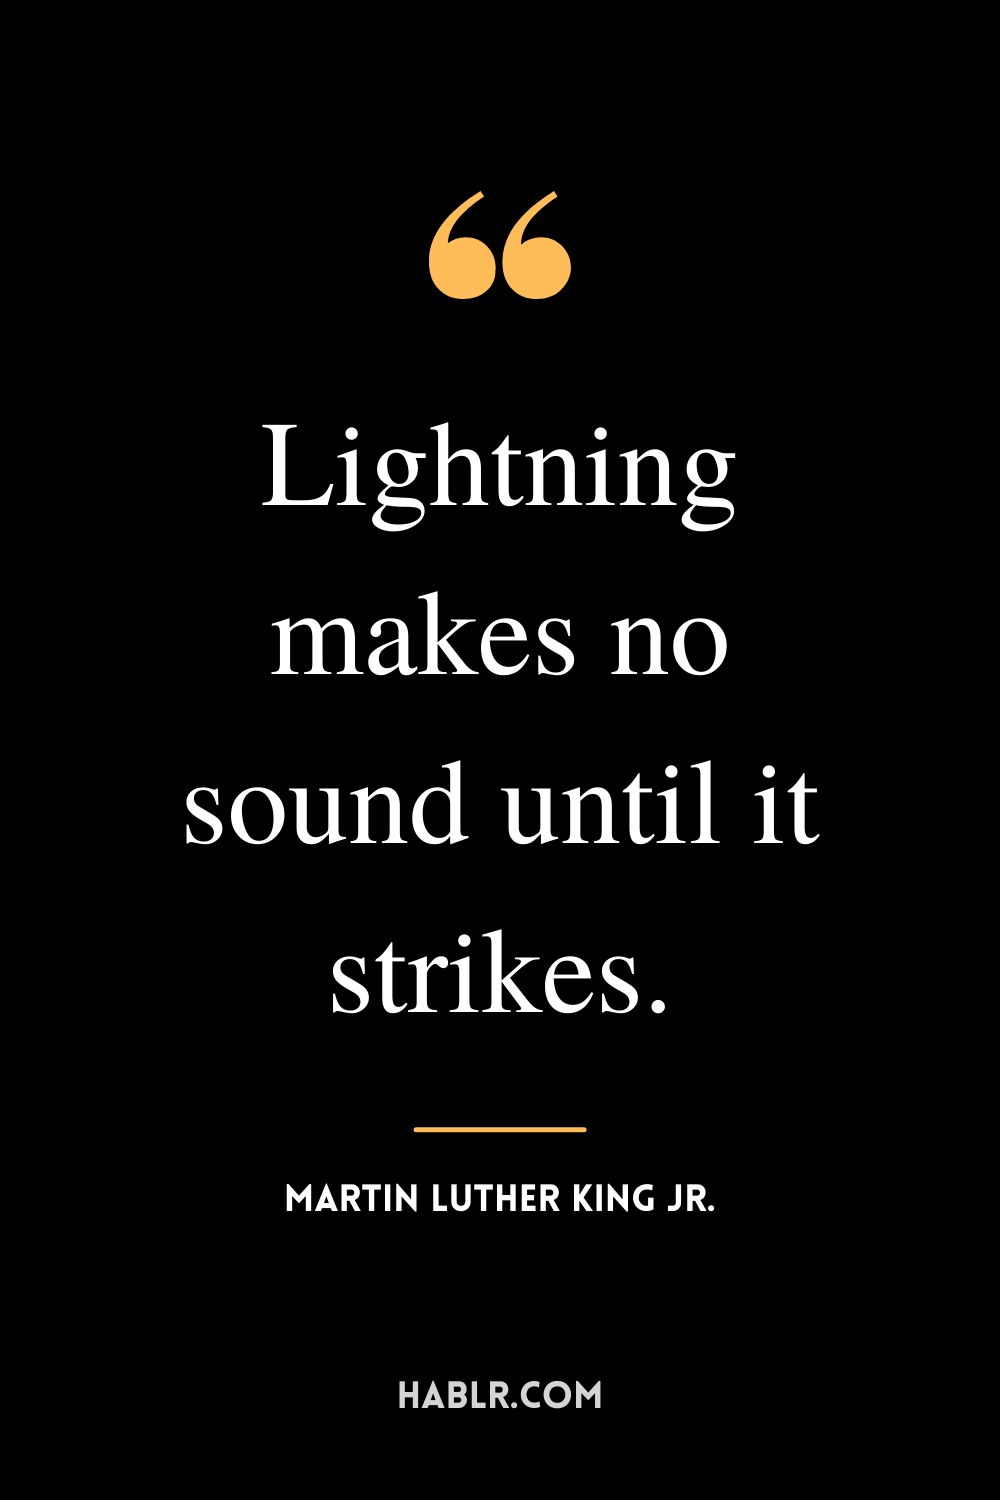 “Lightning makes no sound until it strikes.” -Martin Luther King Jr.